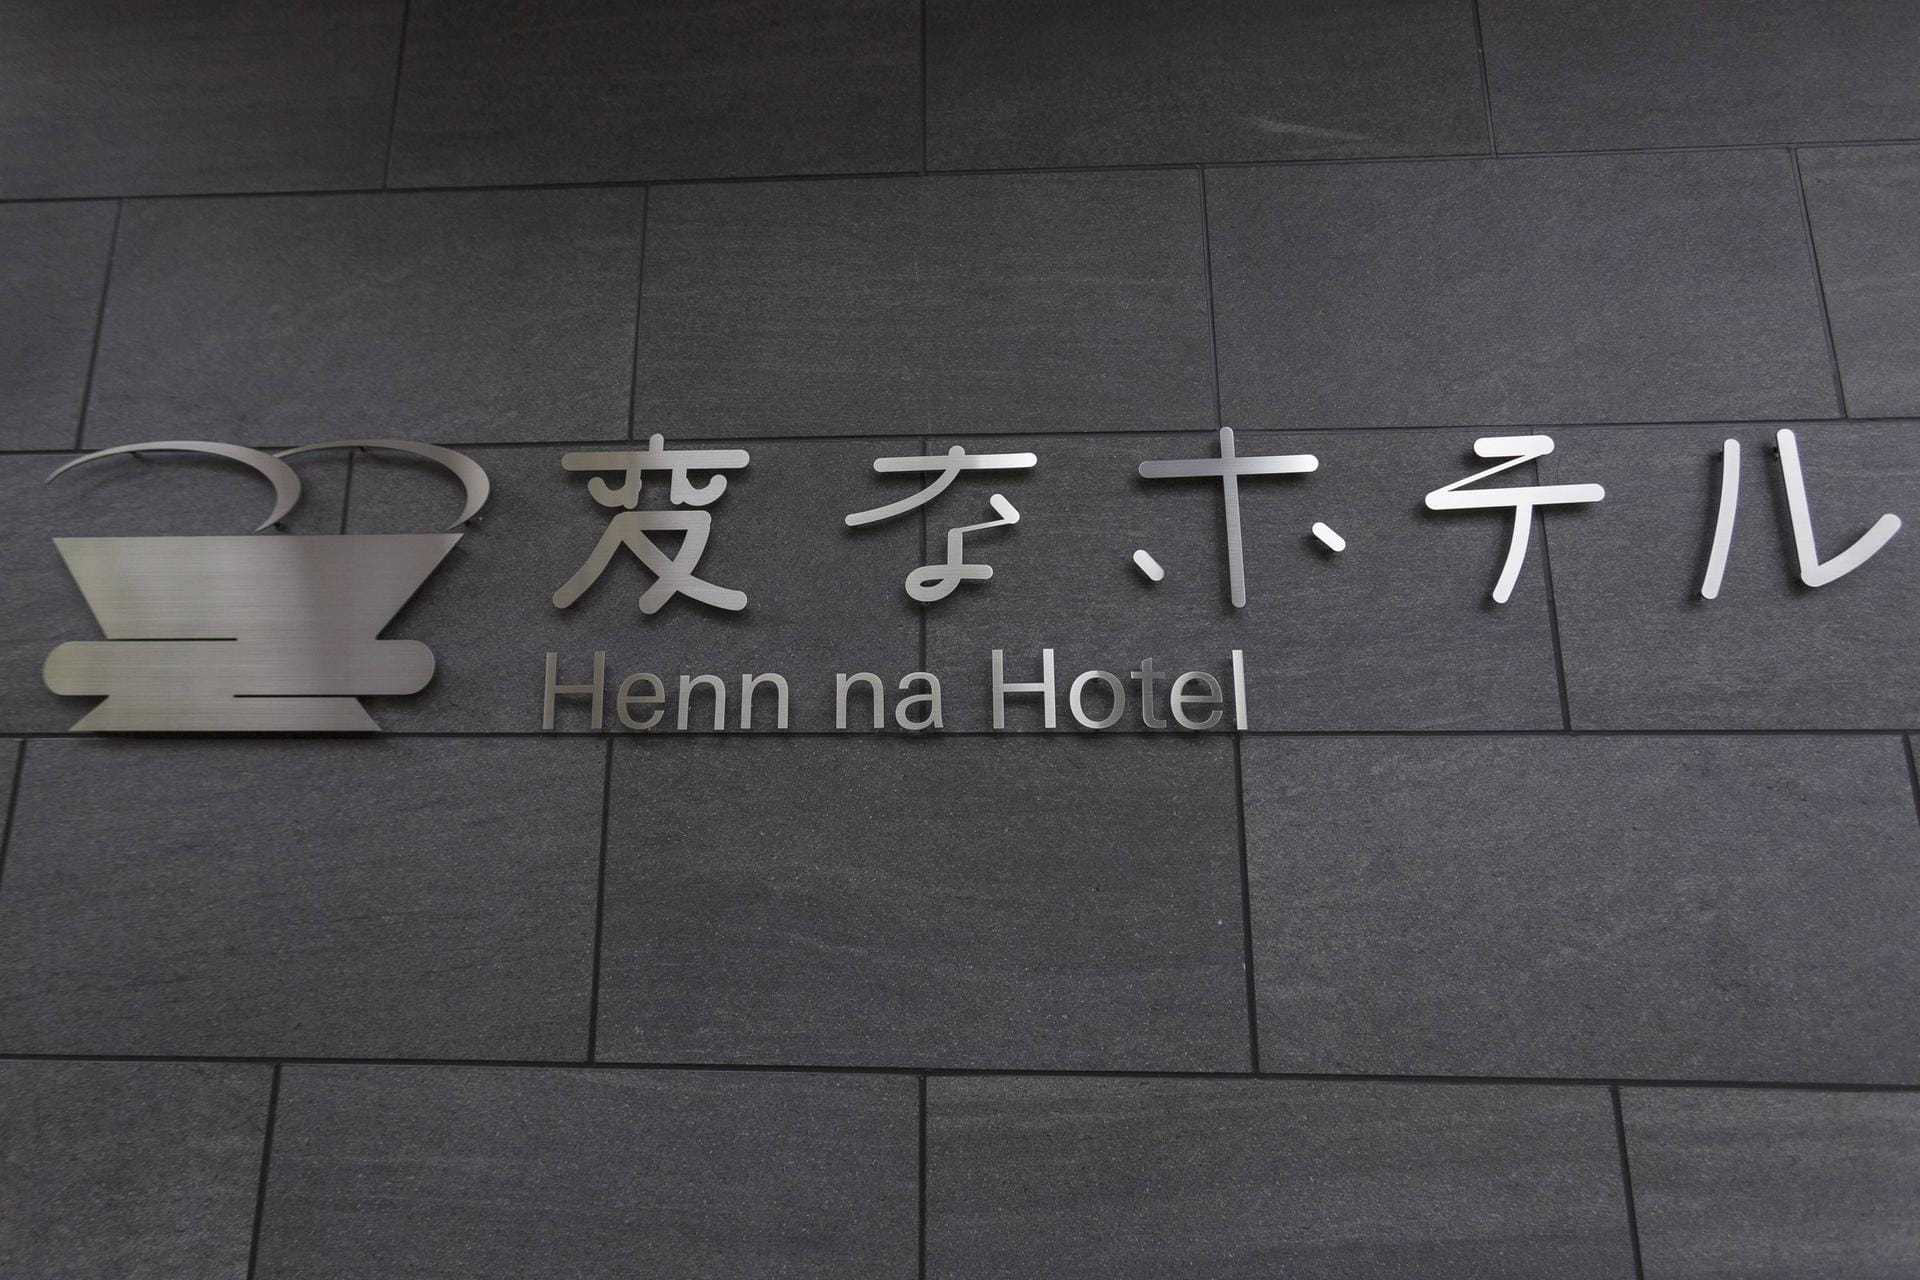 Schriftzug des "Henn na"-Hotel